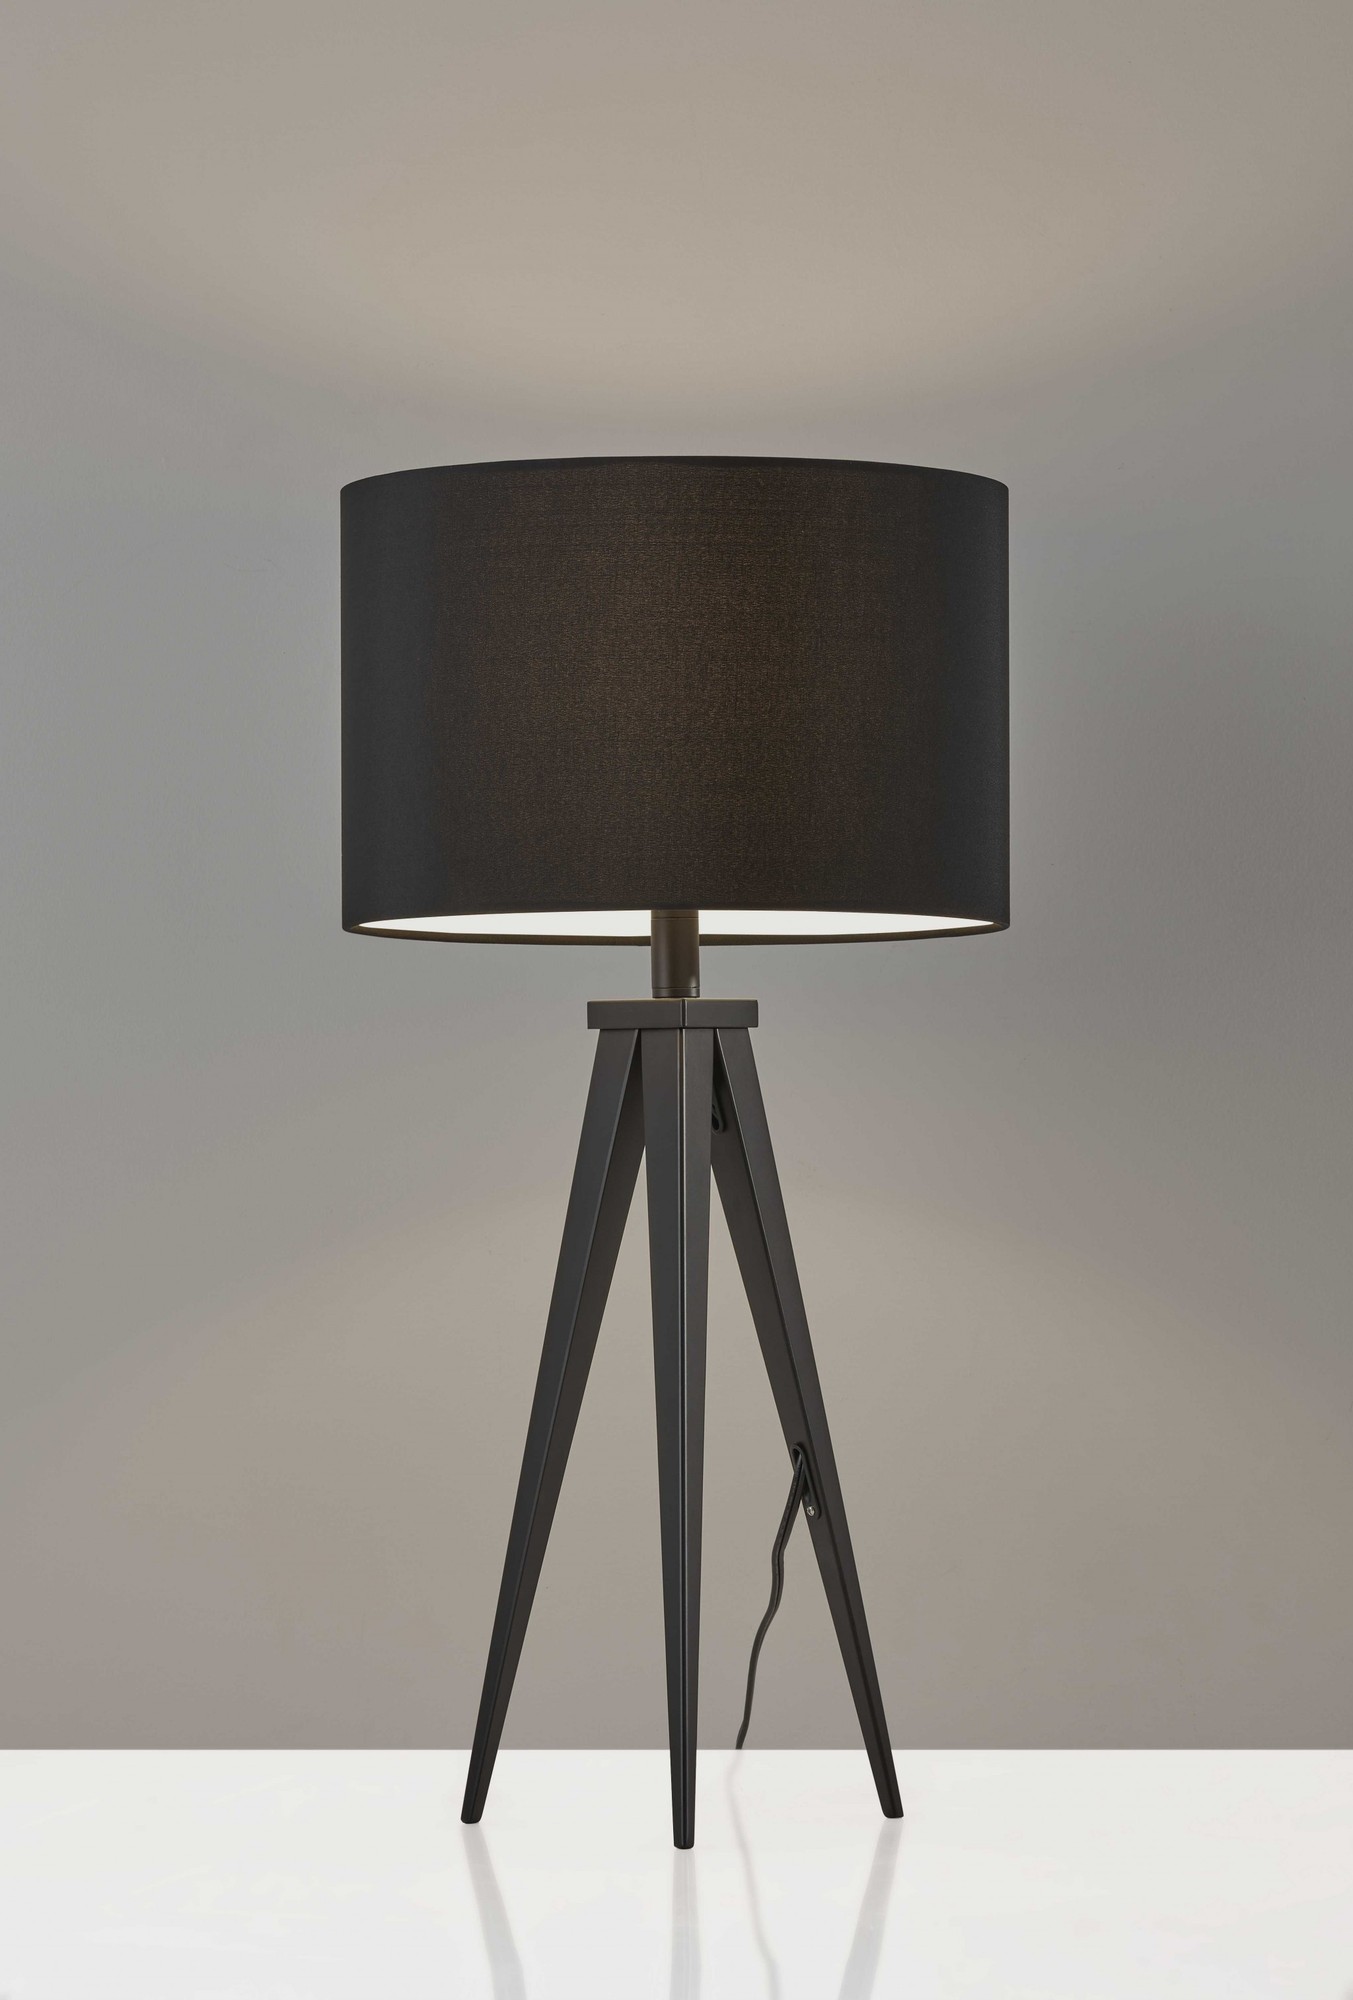 14" X 14" X 28" Black Metal Table Lamp